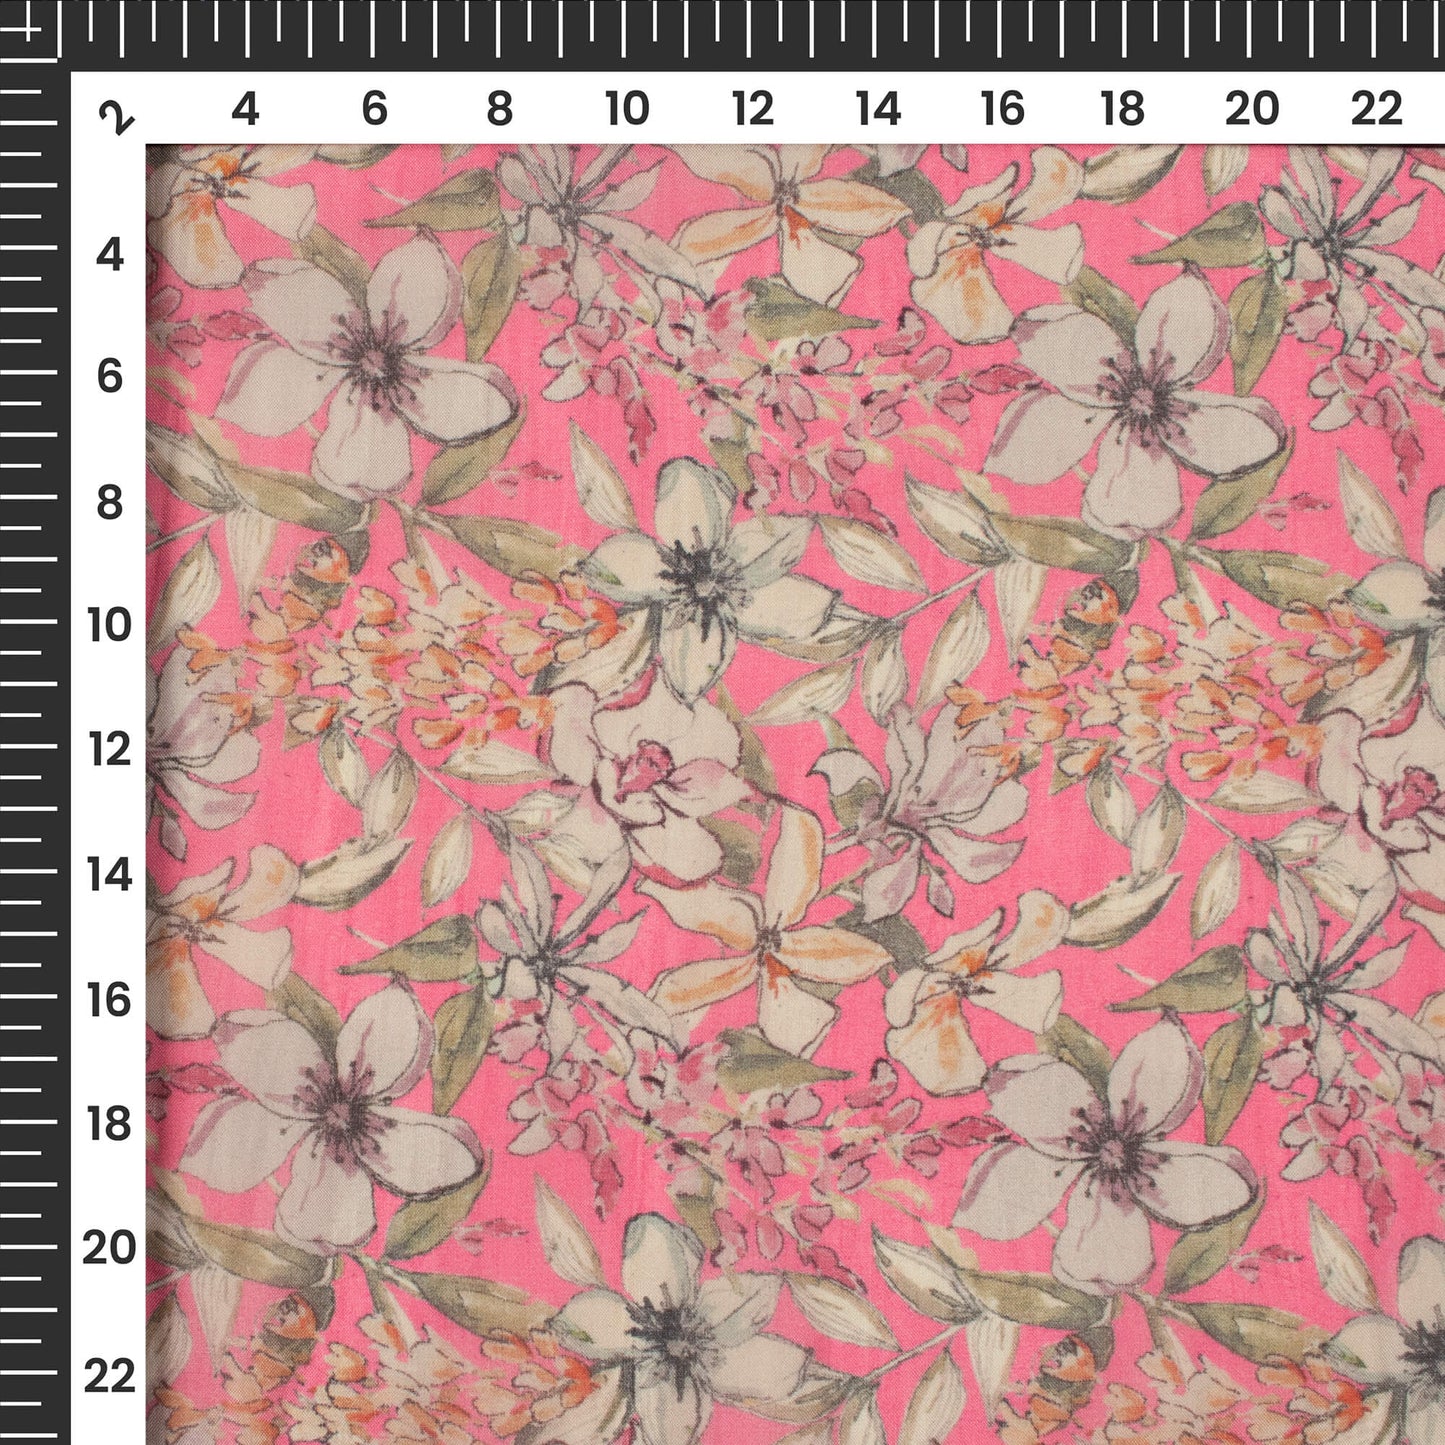 Hot Pink Floral Digital Print Pure Organza Fabric